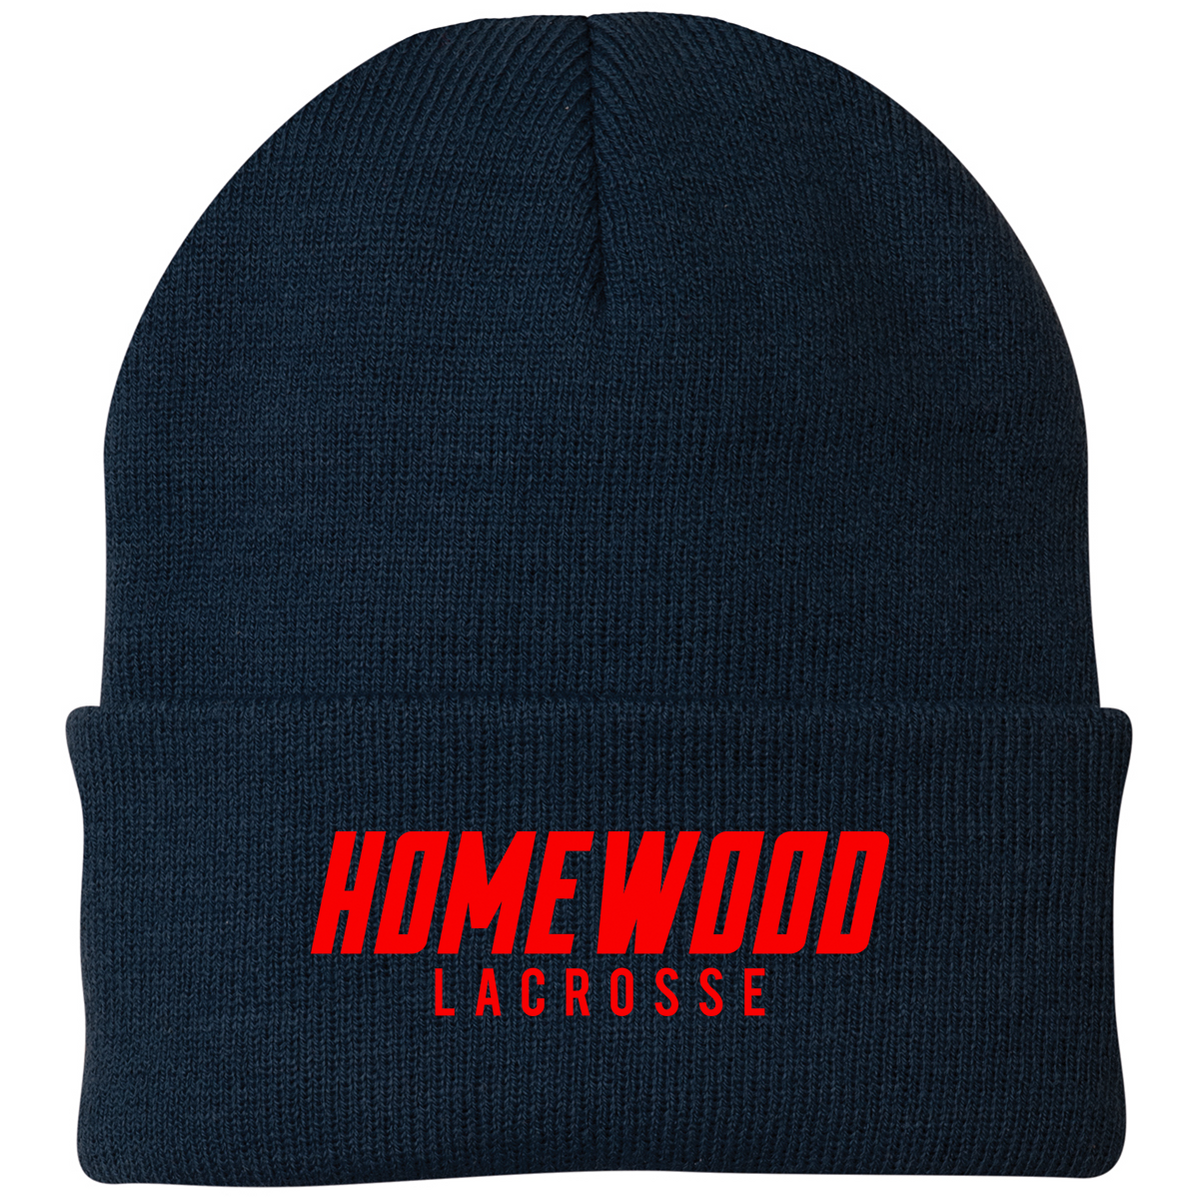 Homewood Lacrosse Knit Beanie